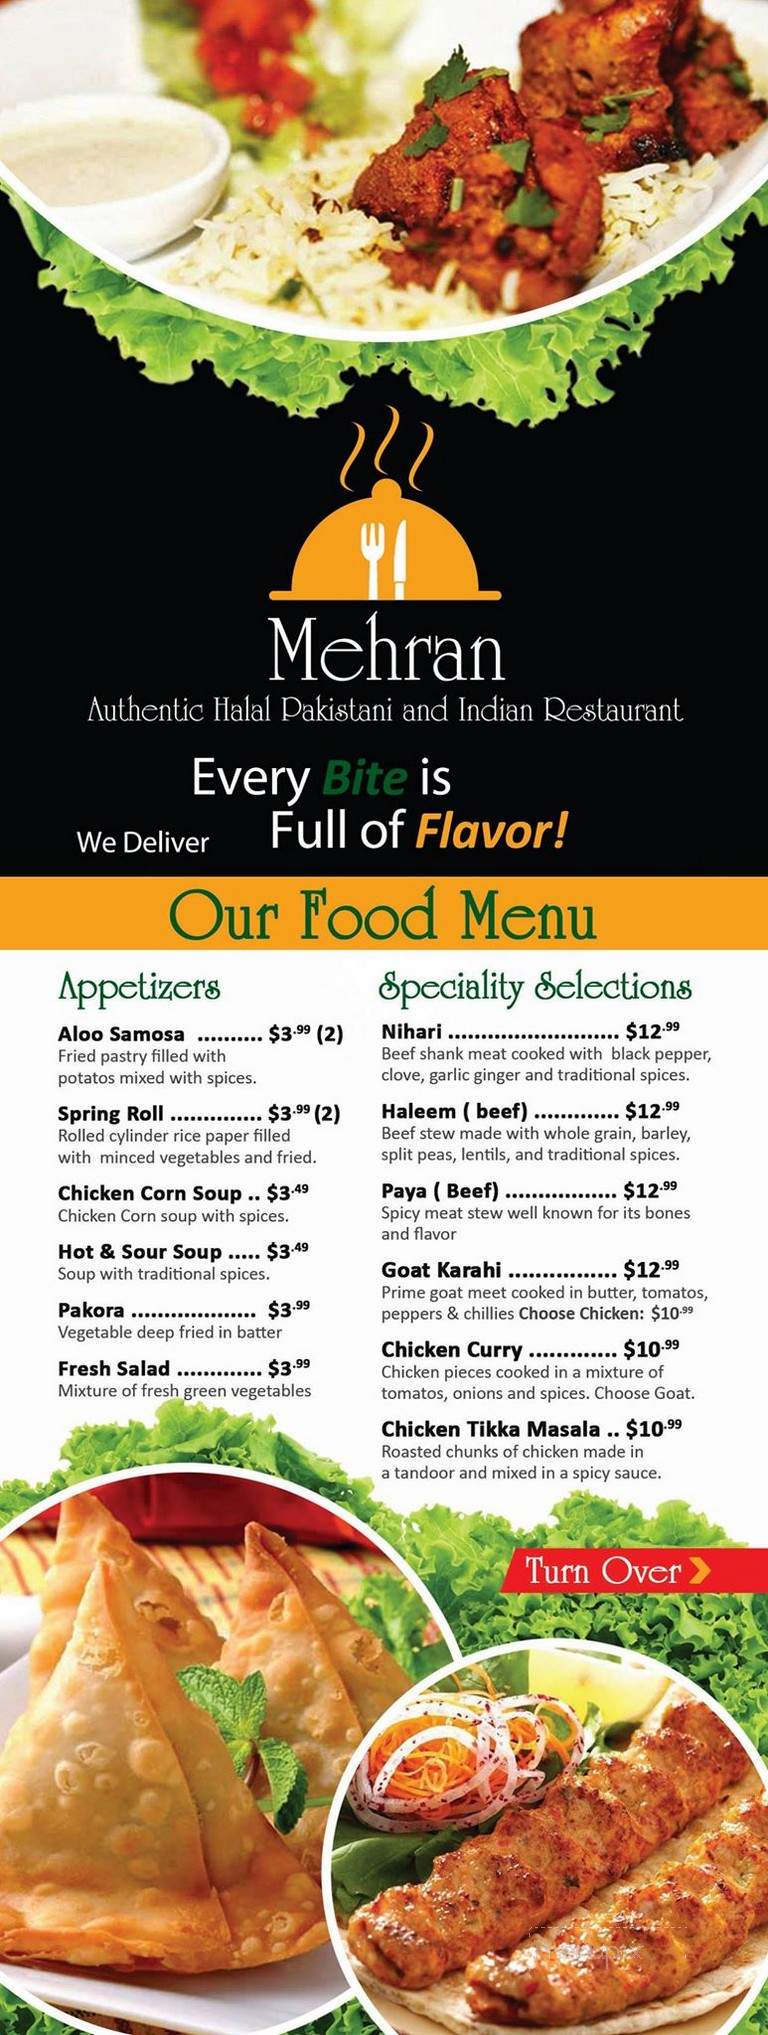 Mehran Restaurant - San Antonio, TX